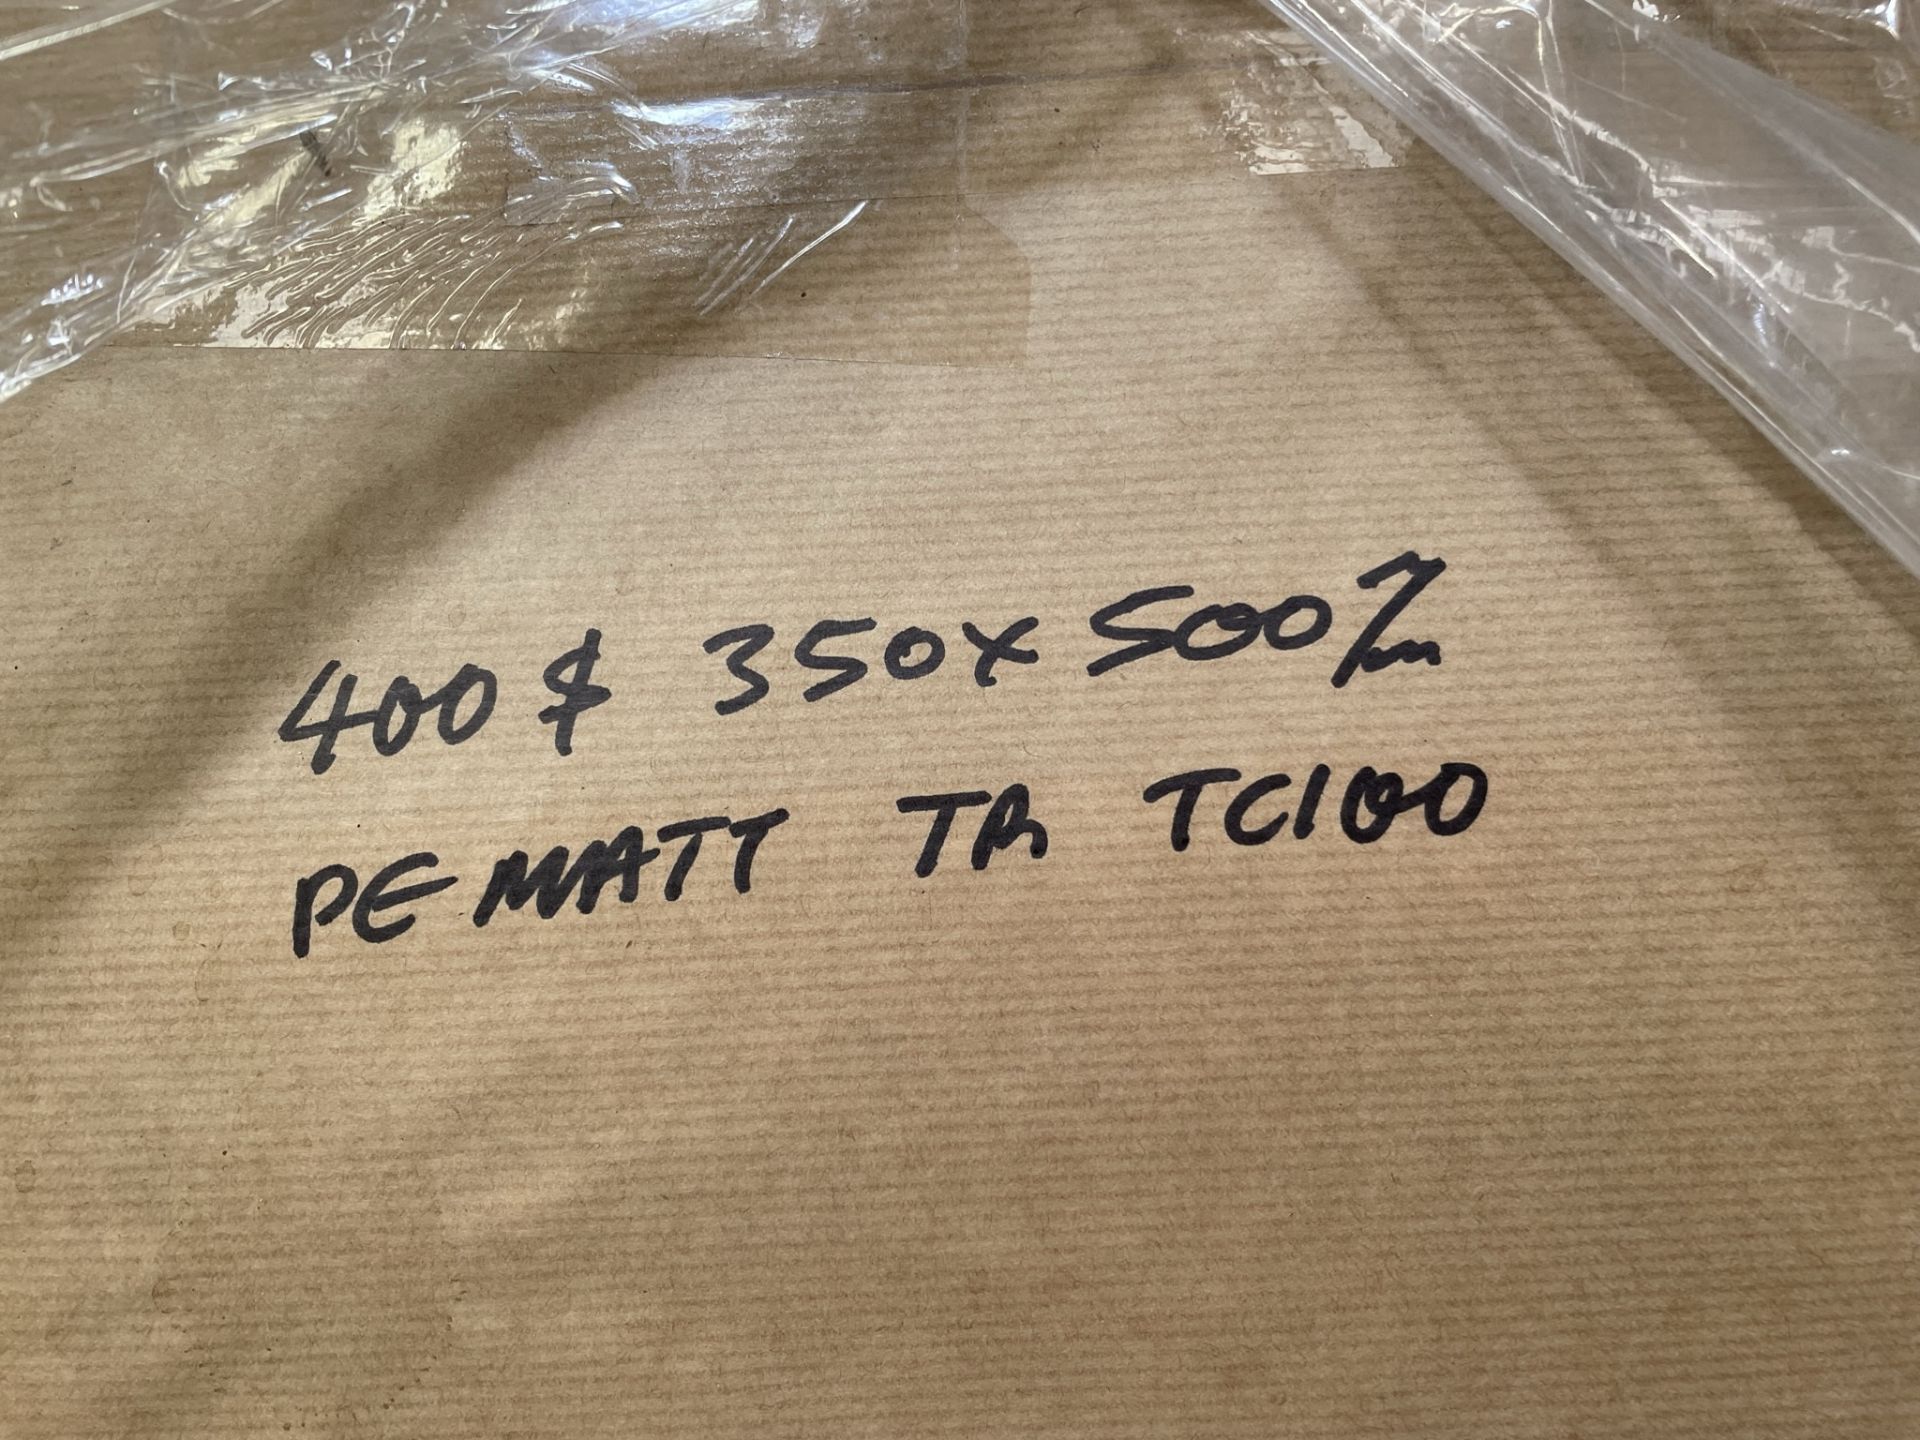 Approximately 12,400 Sheets of Raflatac PE MATT TR TC100 Paper | 350mm x 500mm - Image 5 of 5